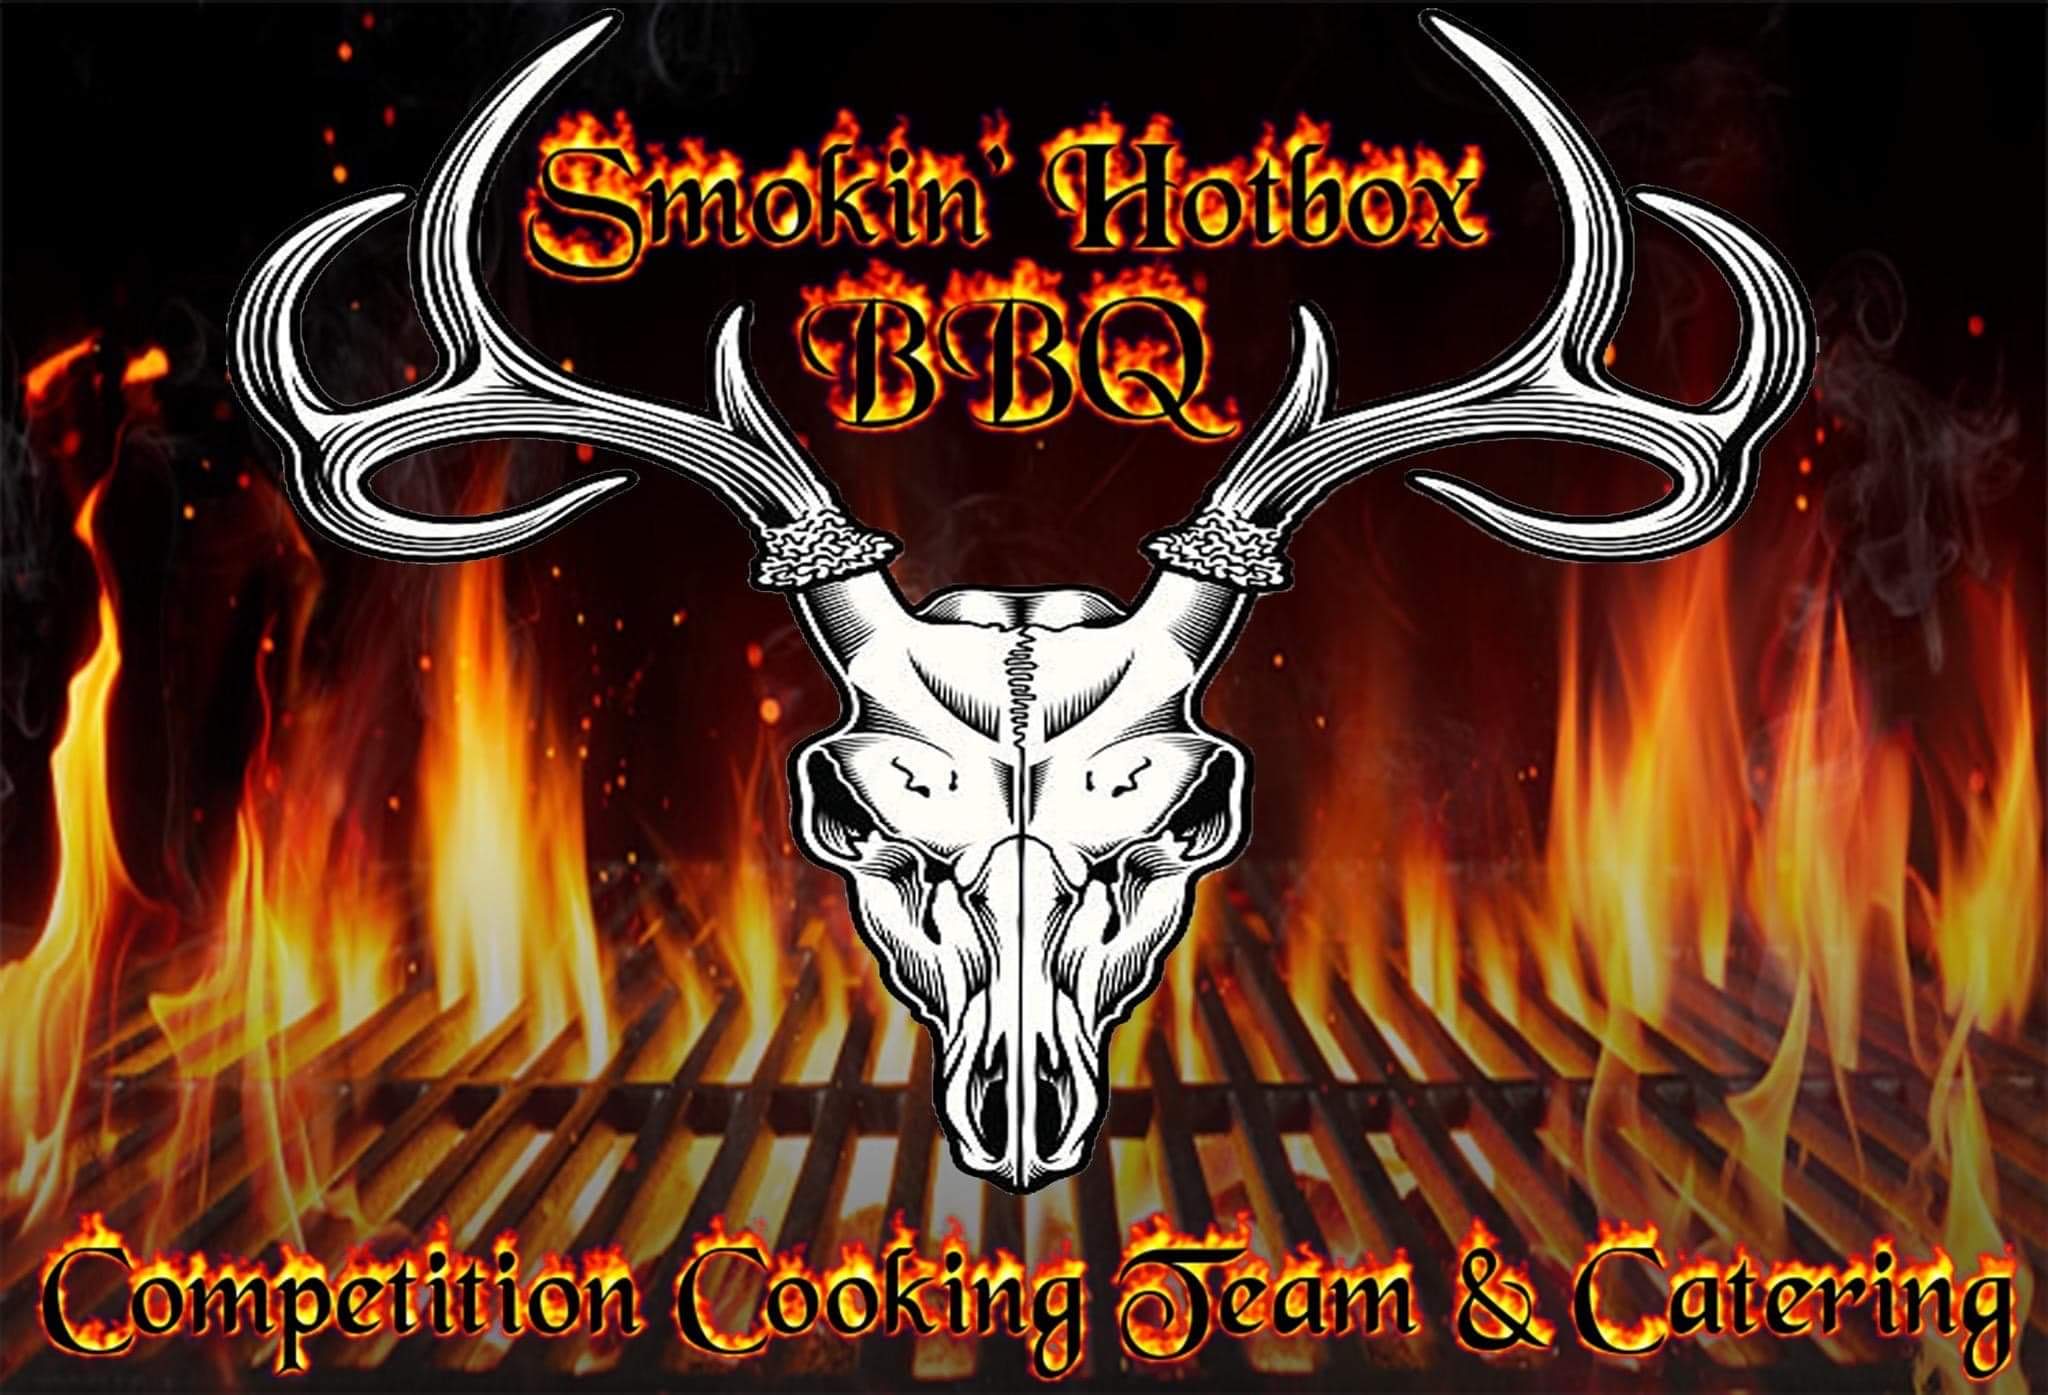 Smokin' HotBox BBQ